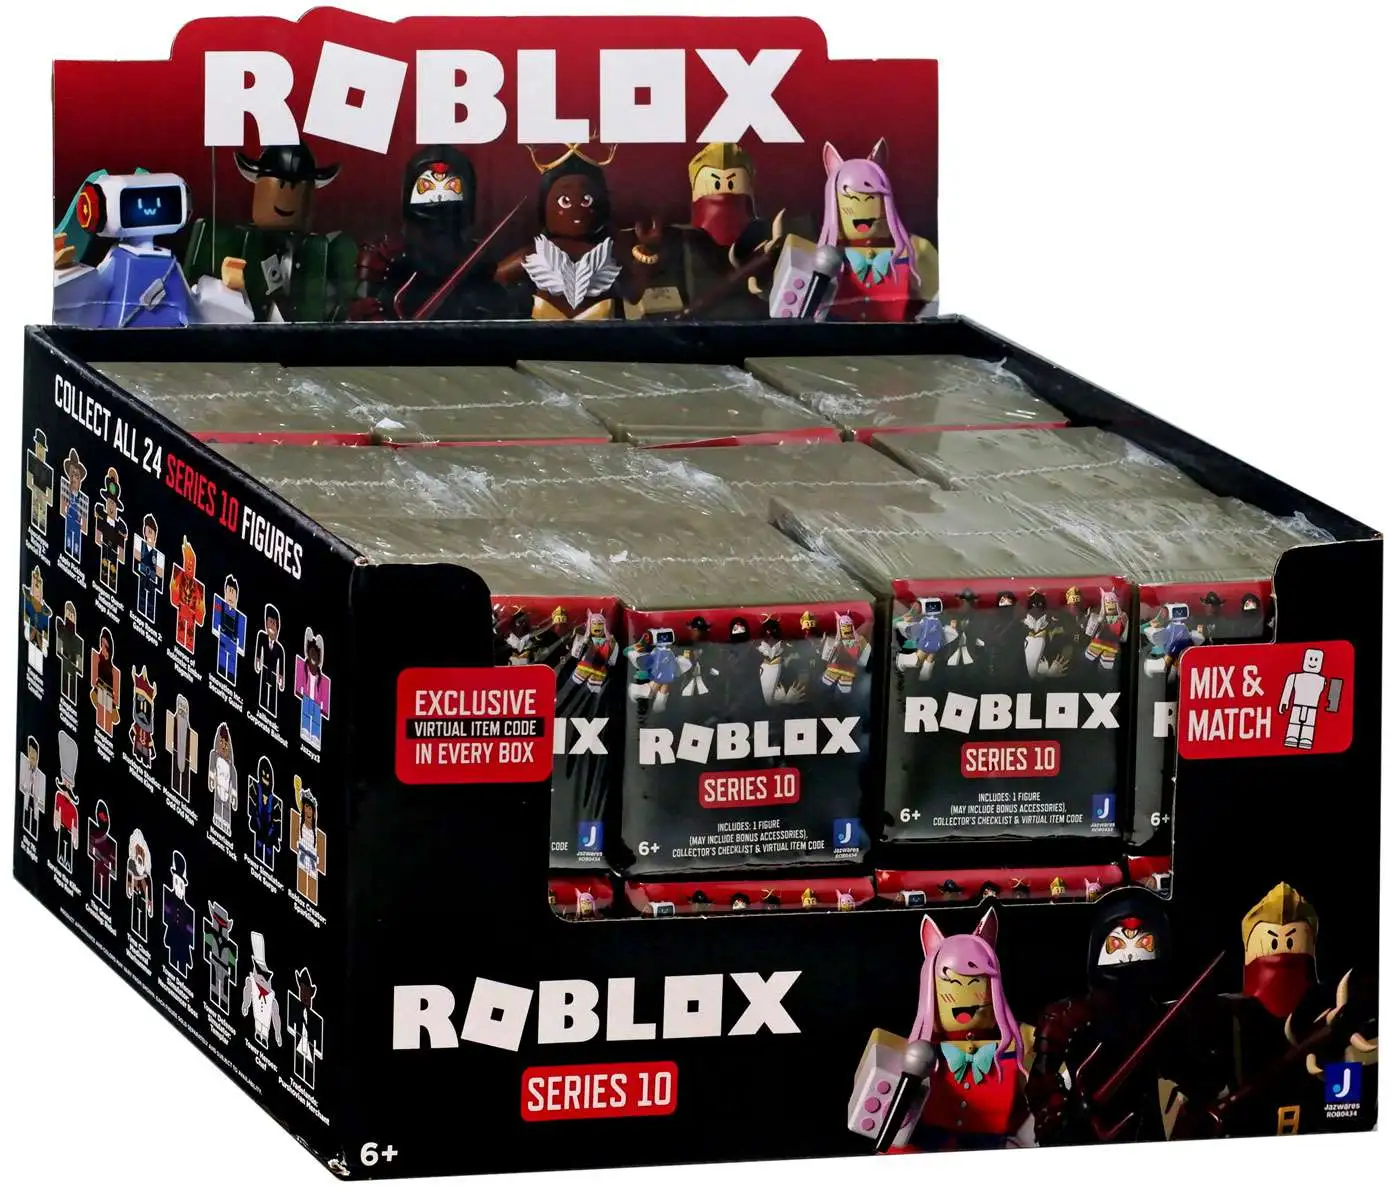 Roblox Celebrity Collection Series 4 24 pieces 12 Virtual Codes